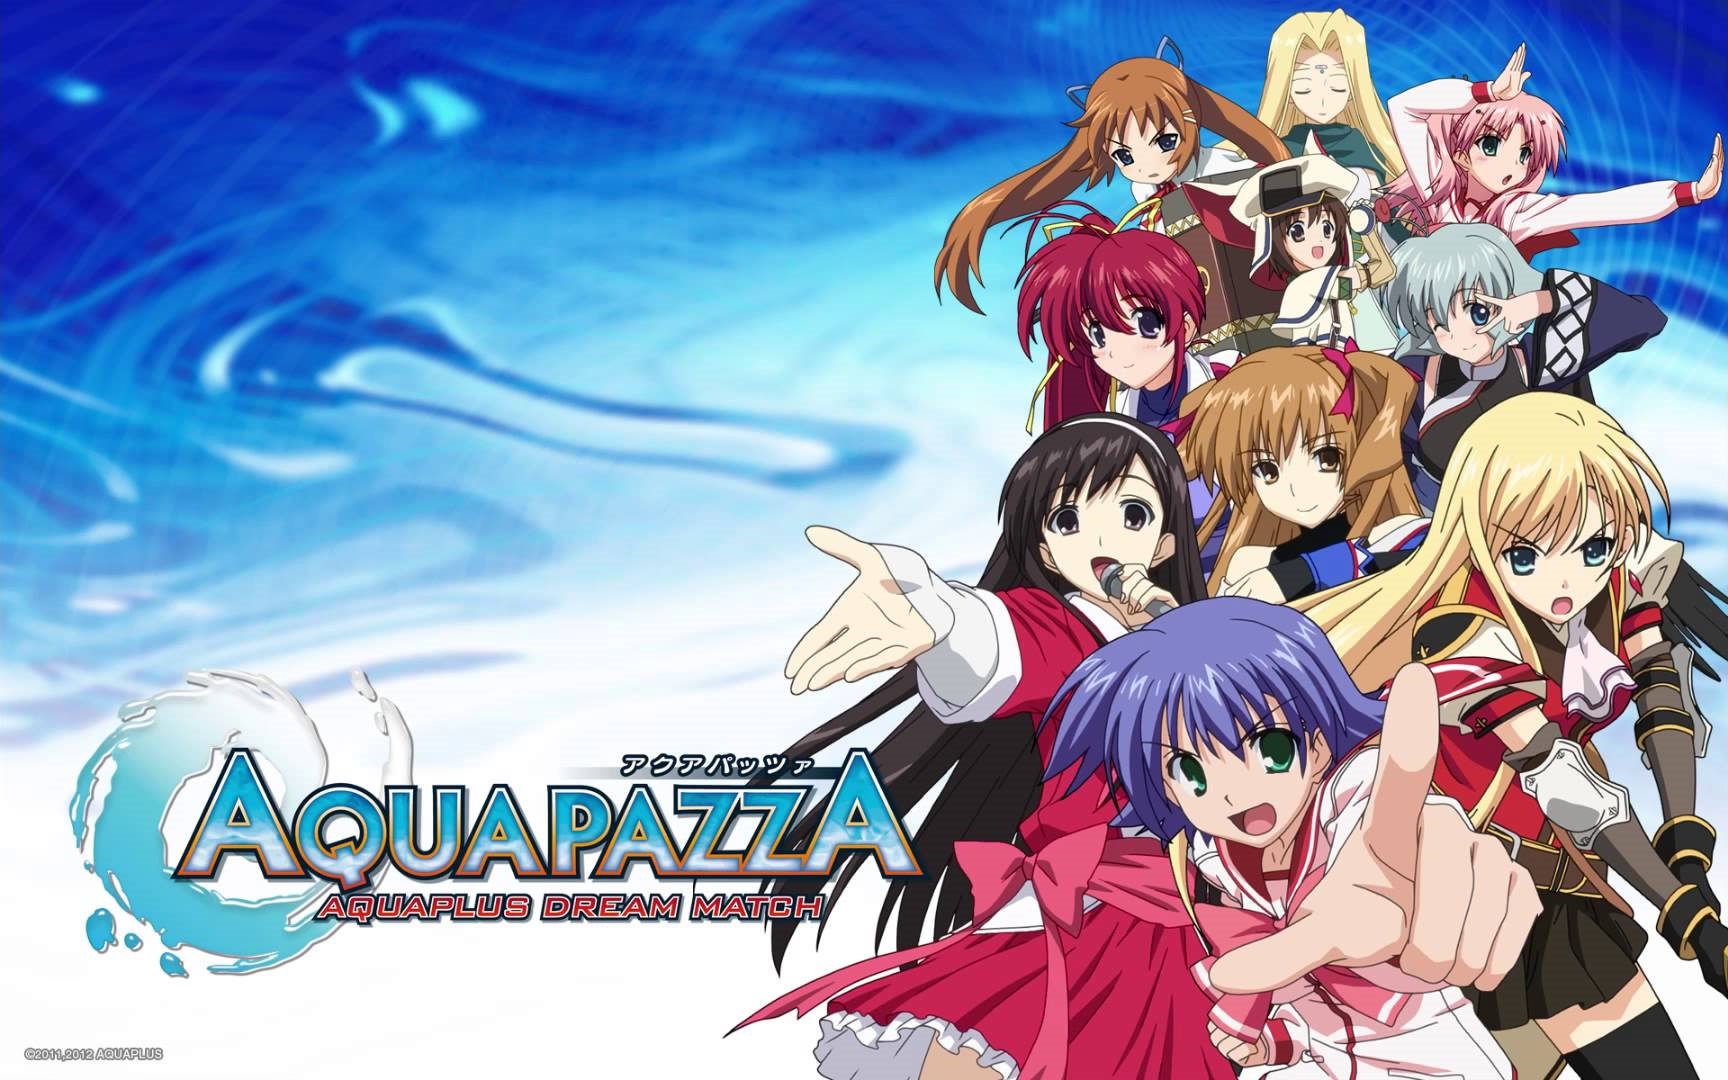 AquaPazza: Aquaplus Dream Match